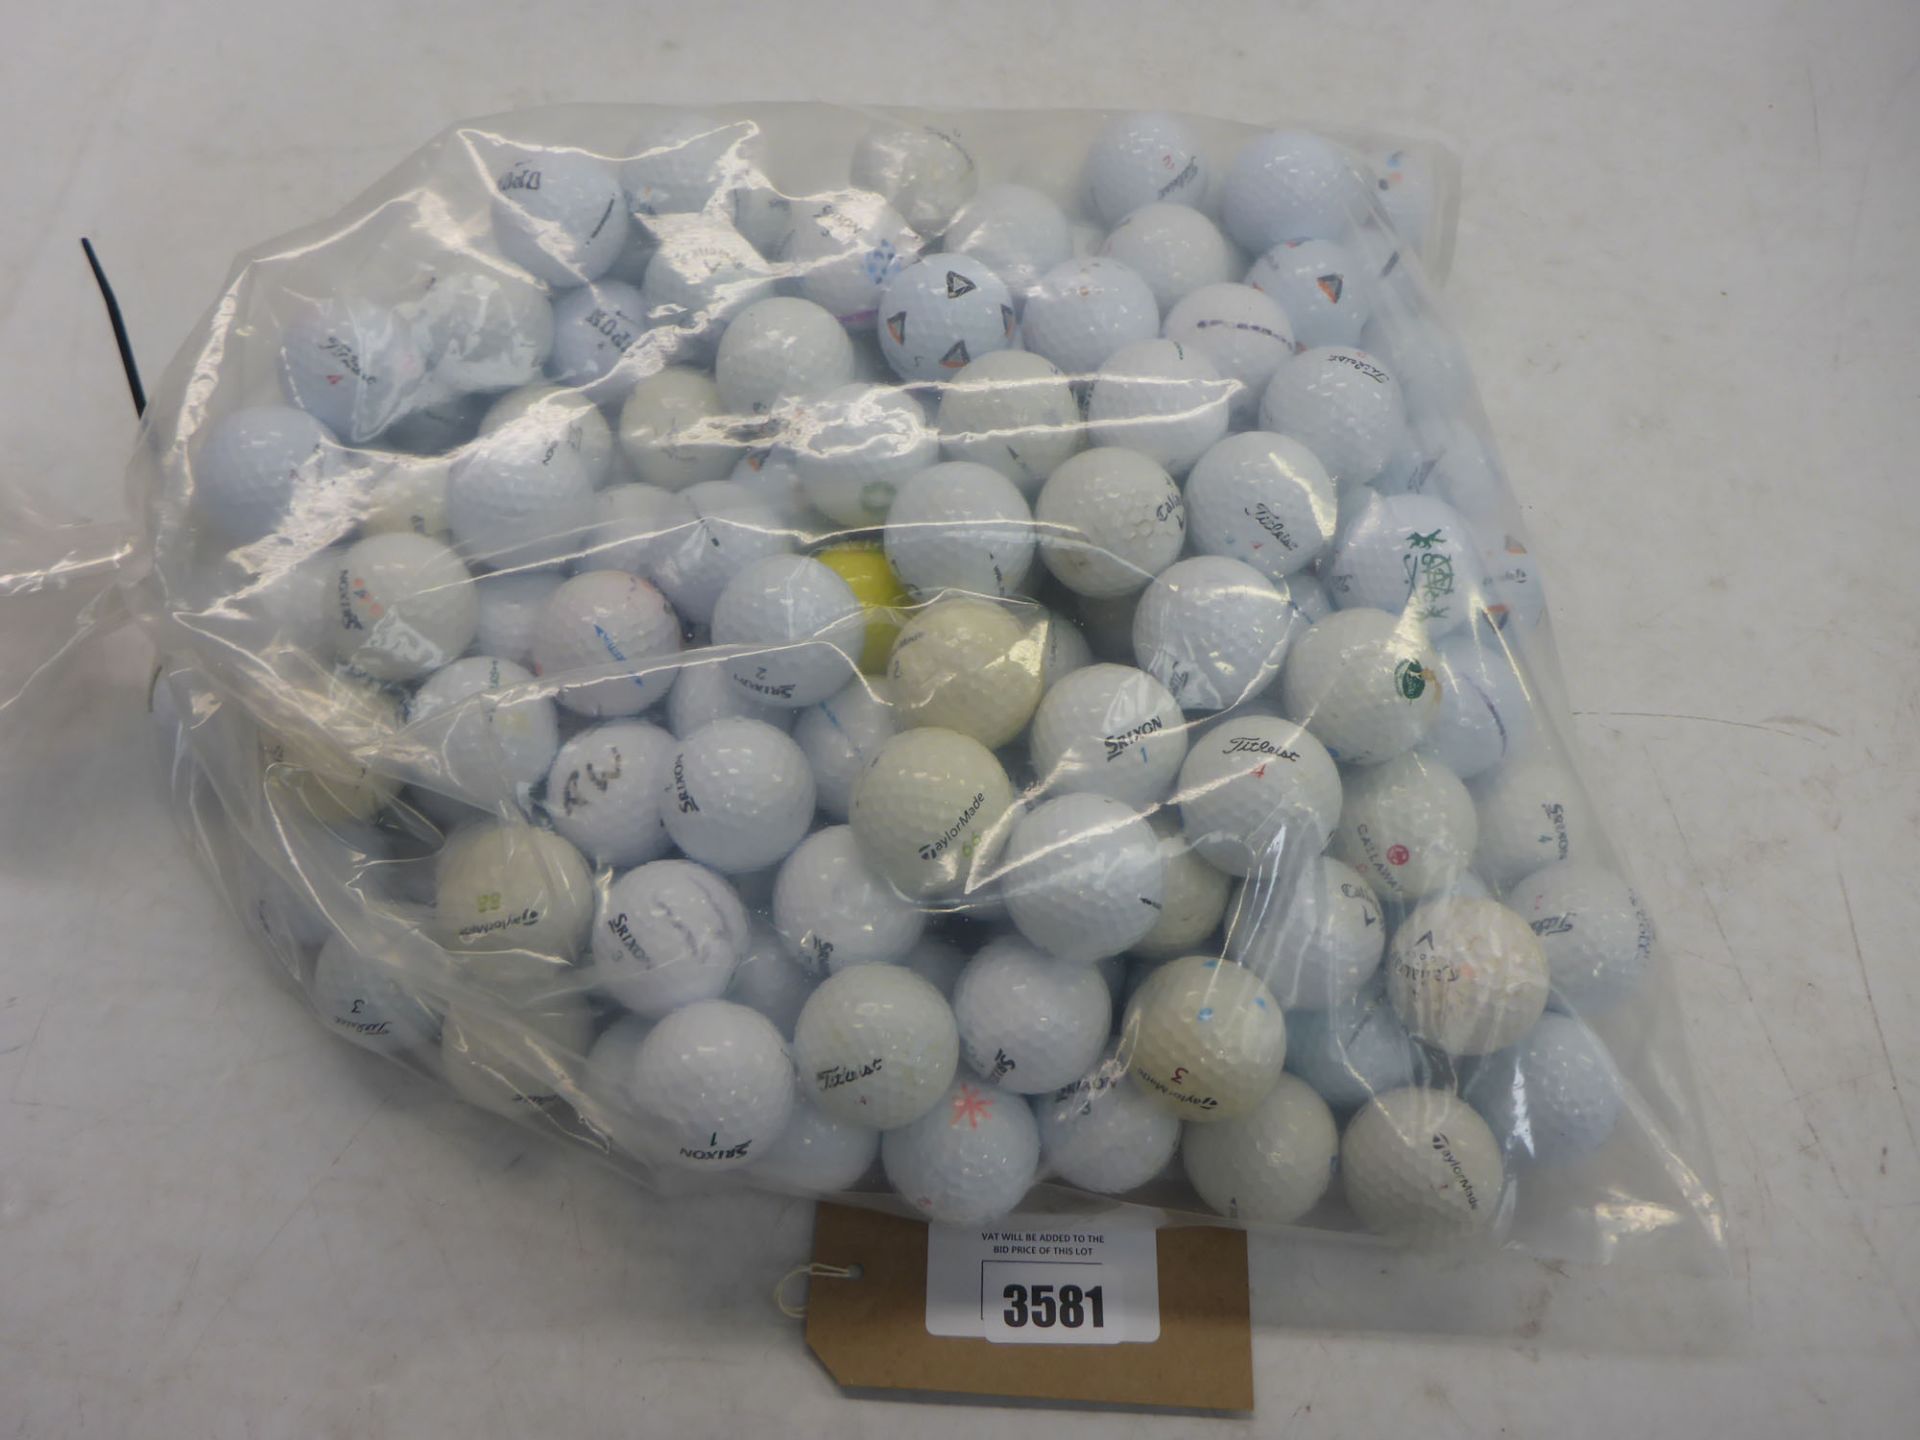 Large quantity of used golf balls